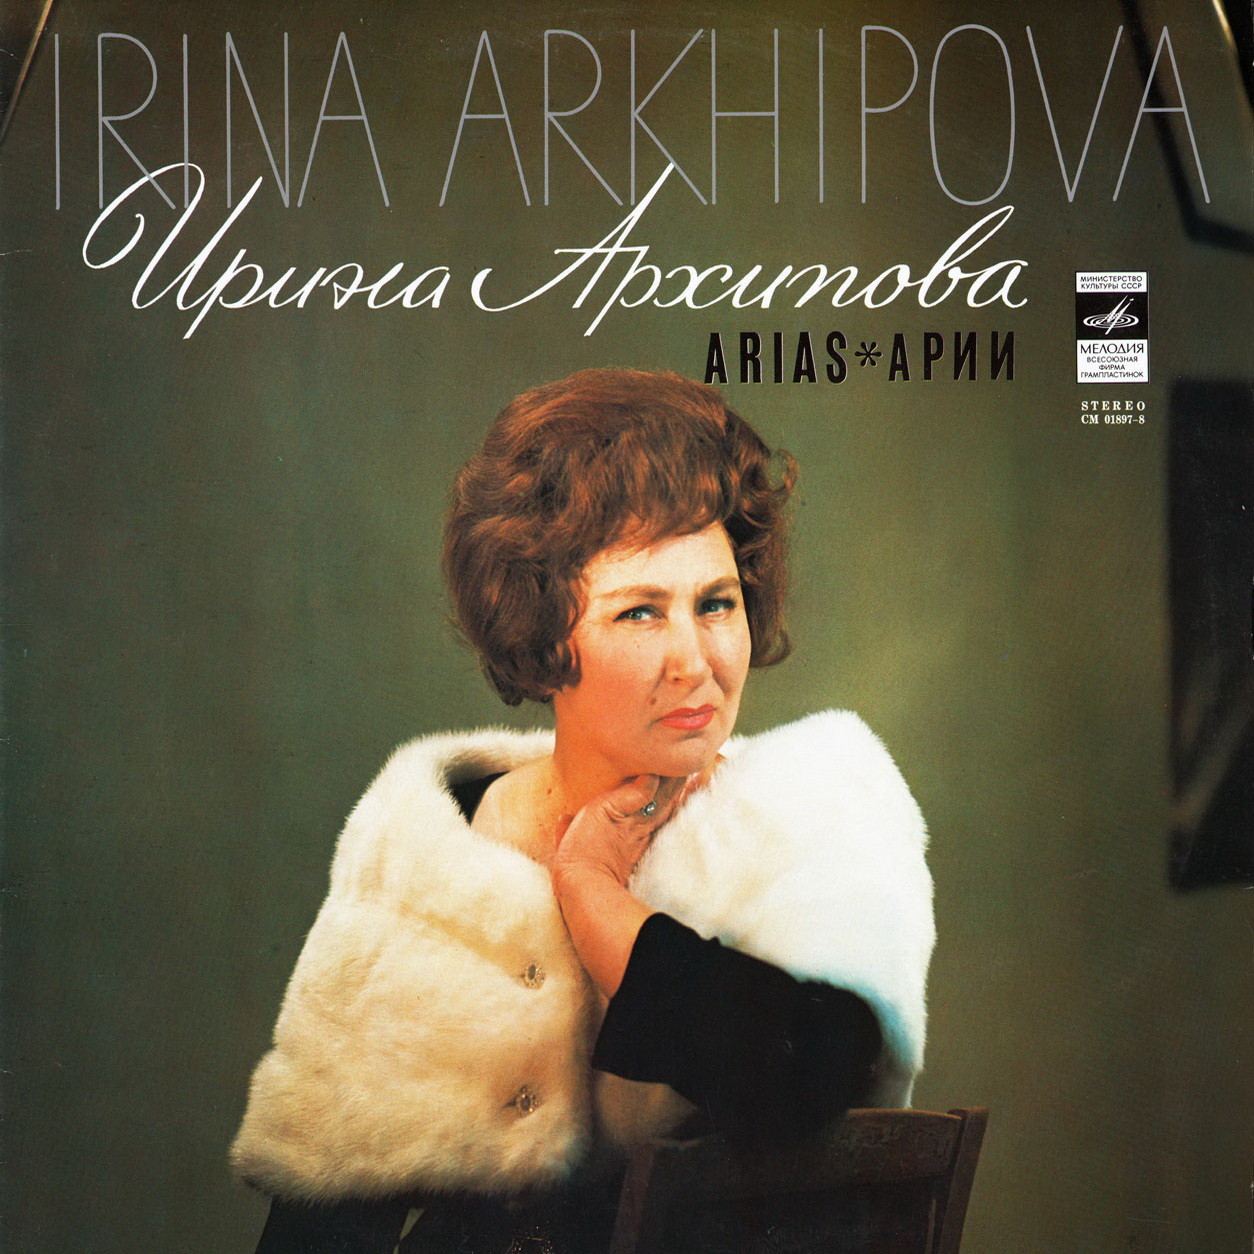 АРХИПОВА Ирина, сопрано. Арии эпохи барокко